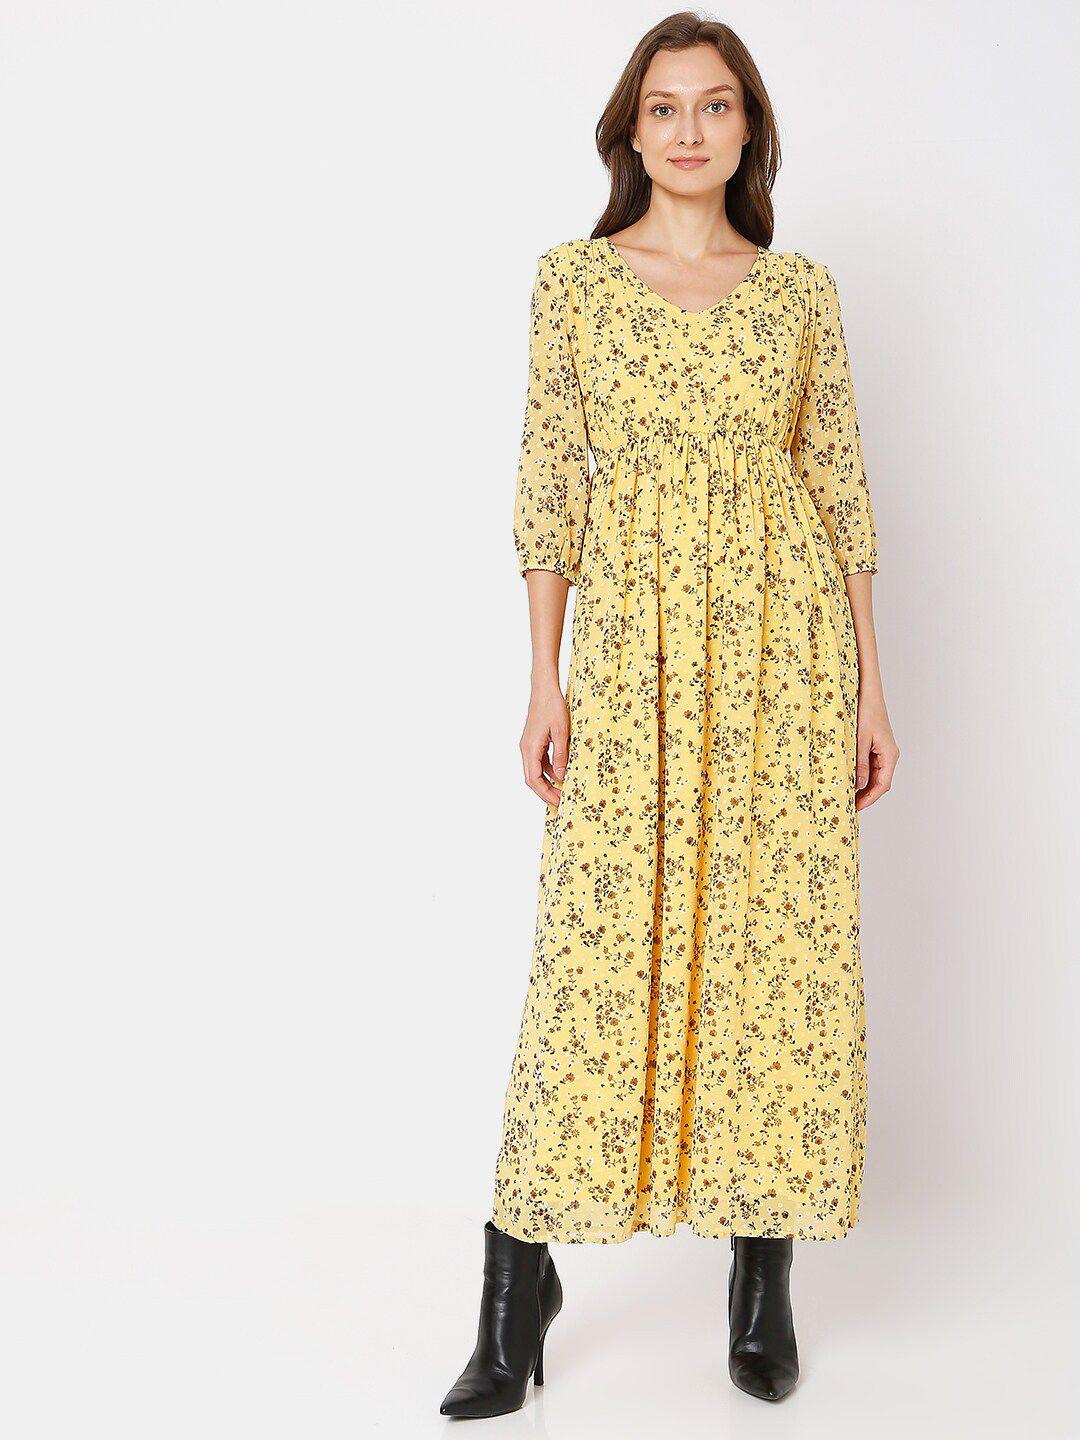 vero-moda-yellow-floral-midi-dress